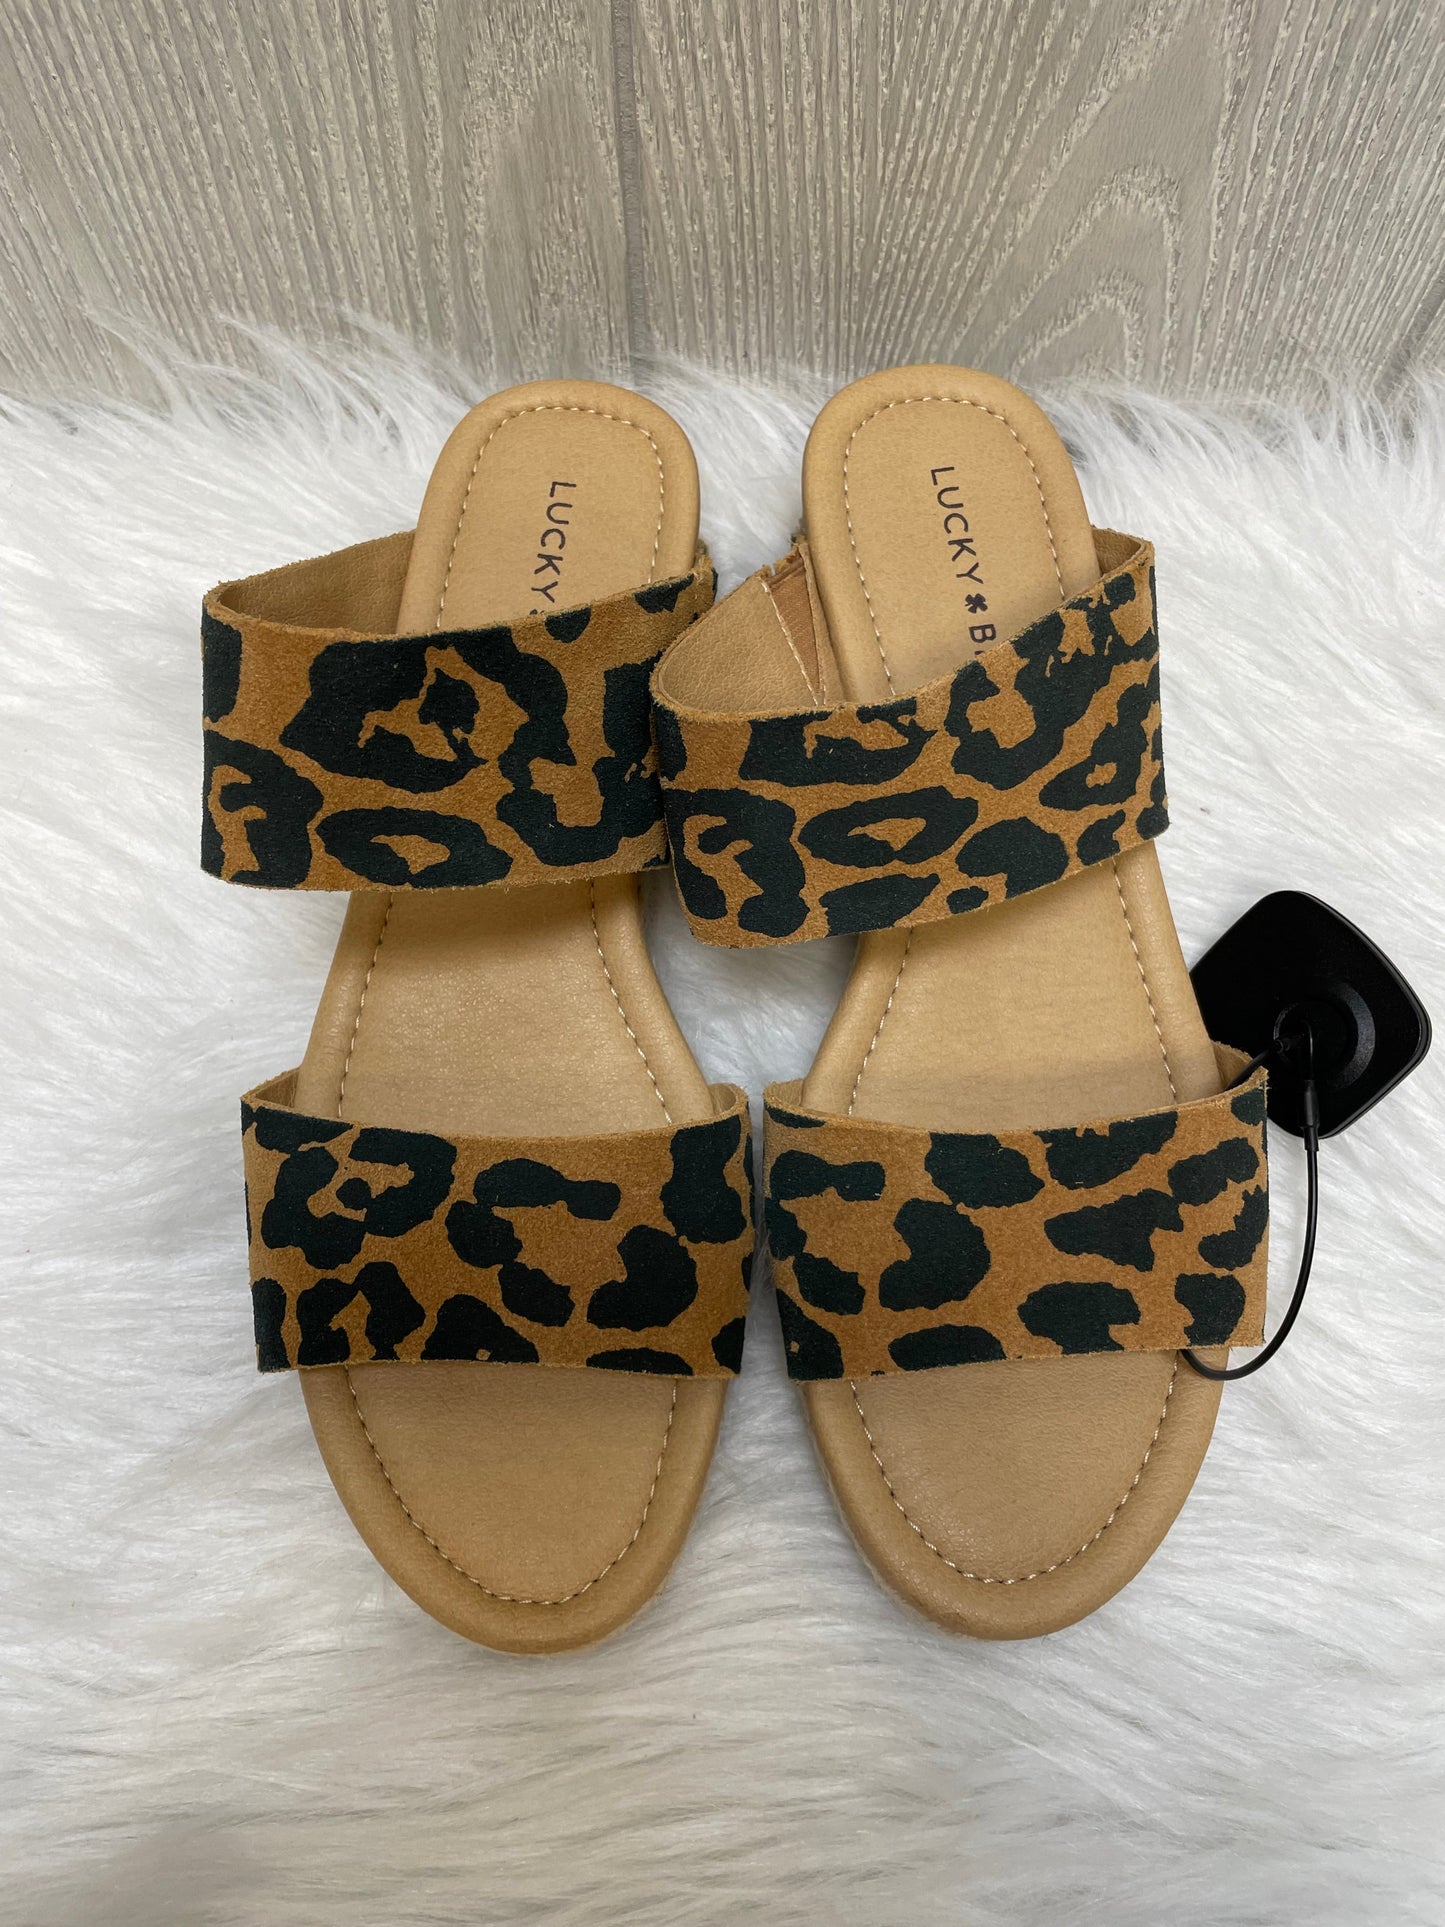 Animal Print Sandals Heels Wedge Lucky Brand, Size 7.5